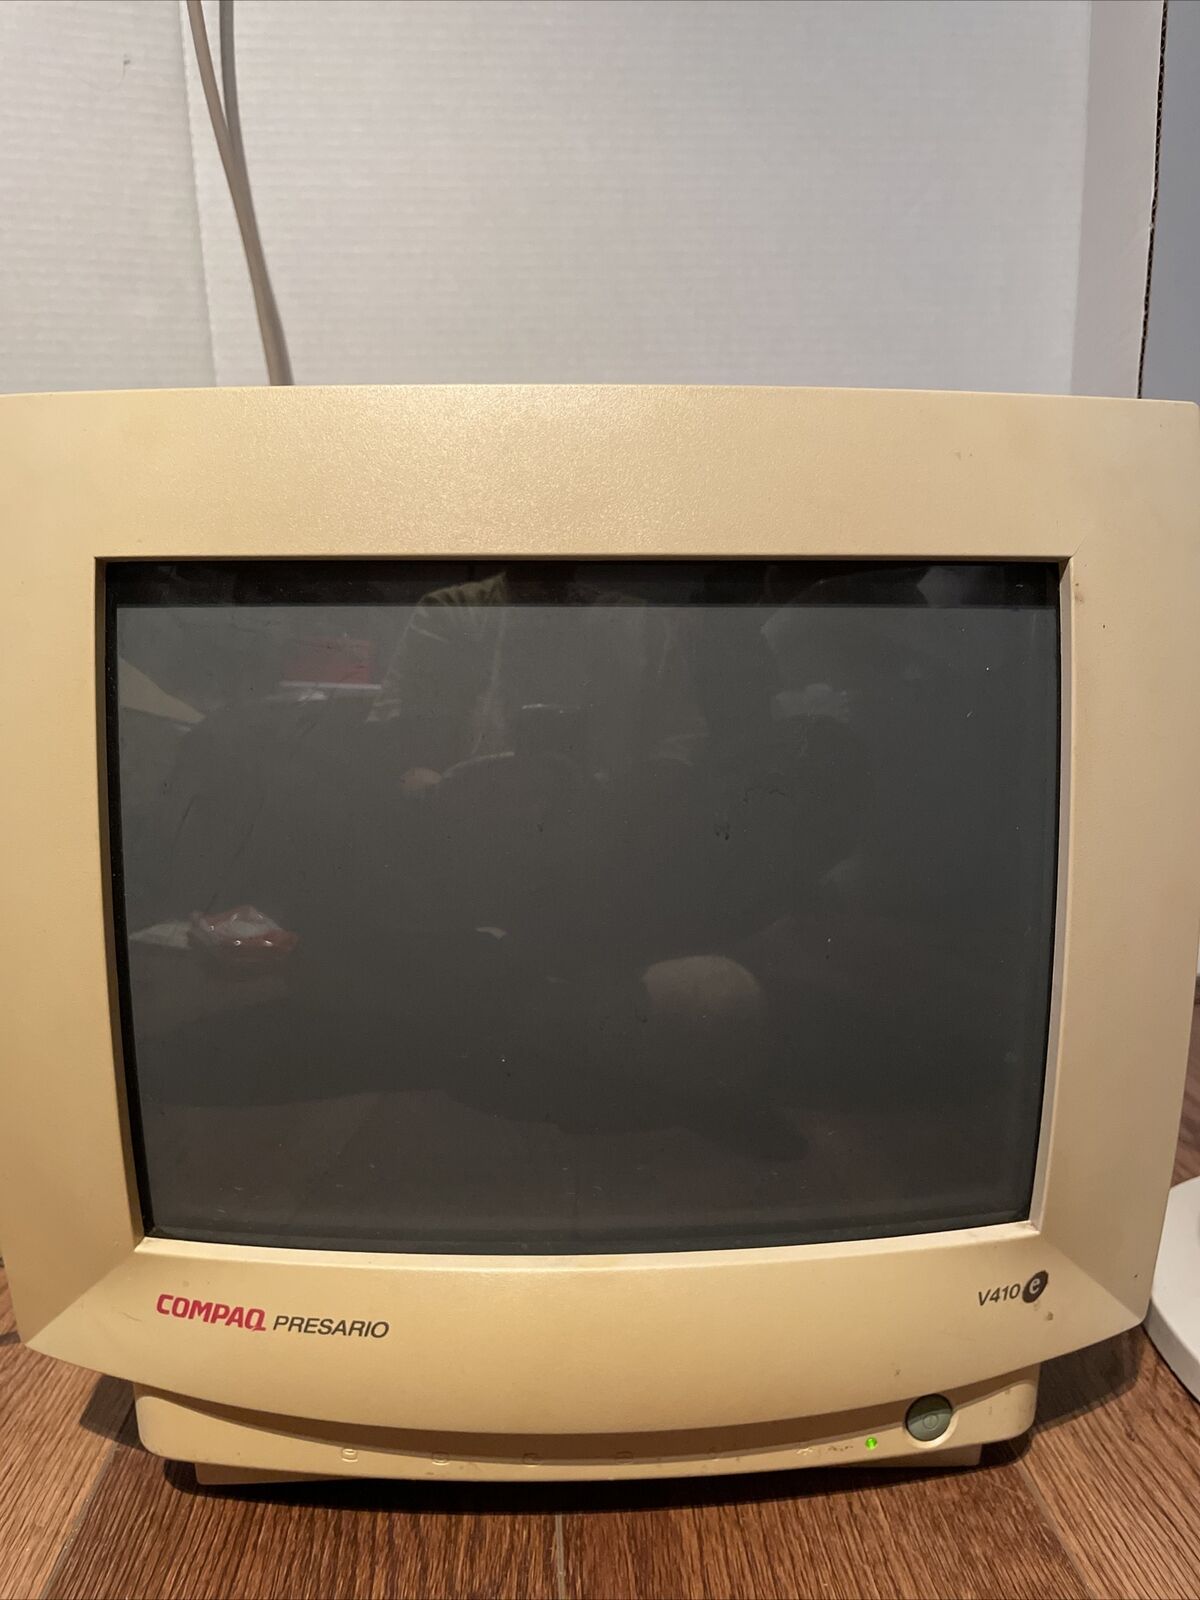 Vintage Compaq Presario V410  Color Monitor  w/Stand Retro Cables Original Box